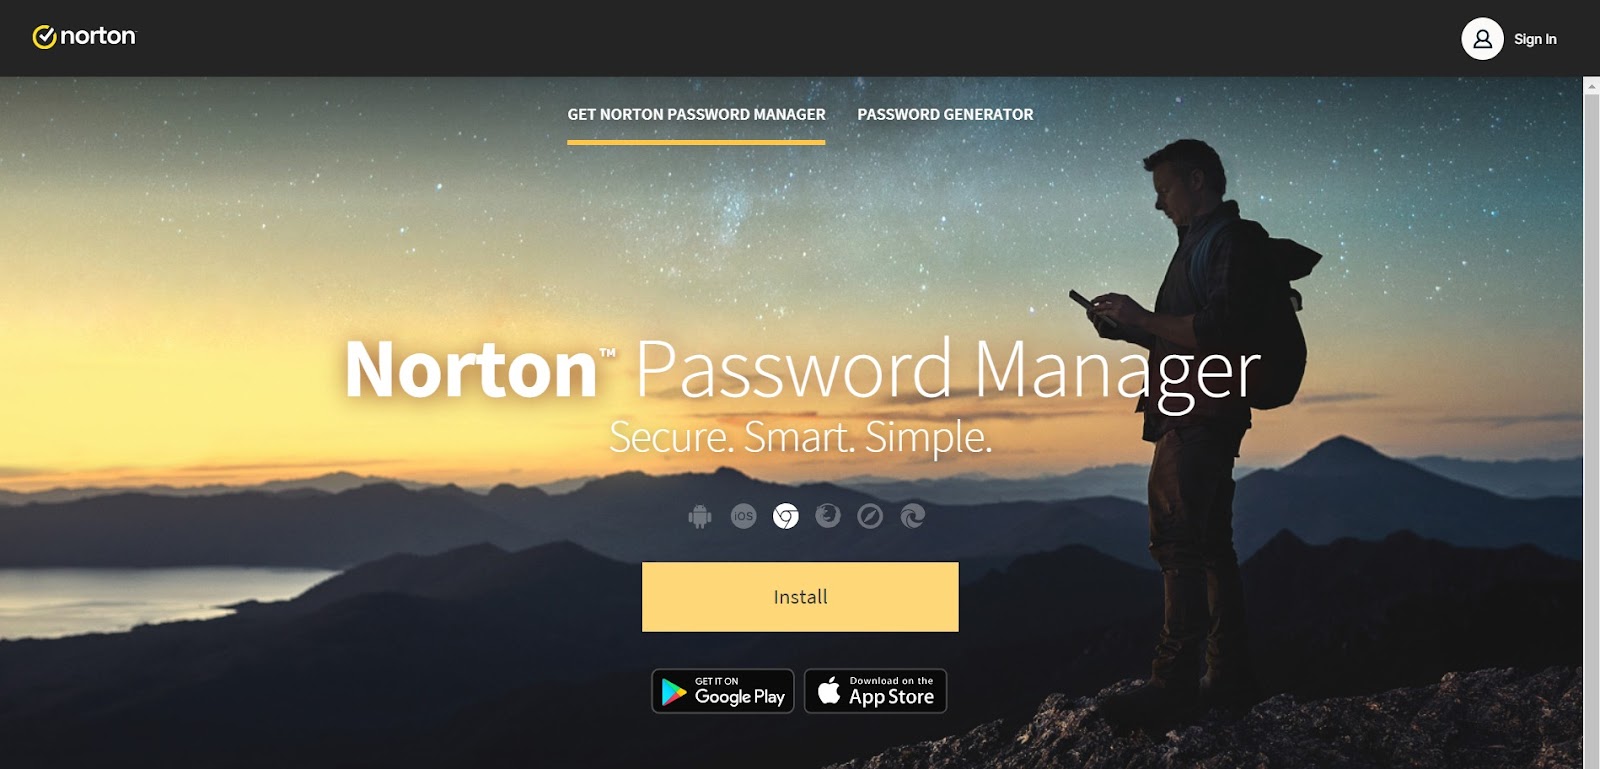 A screenshot of Norton Password Manager's website